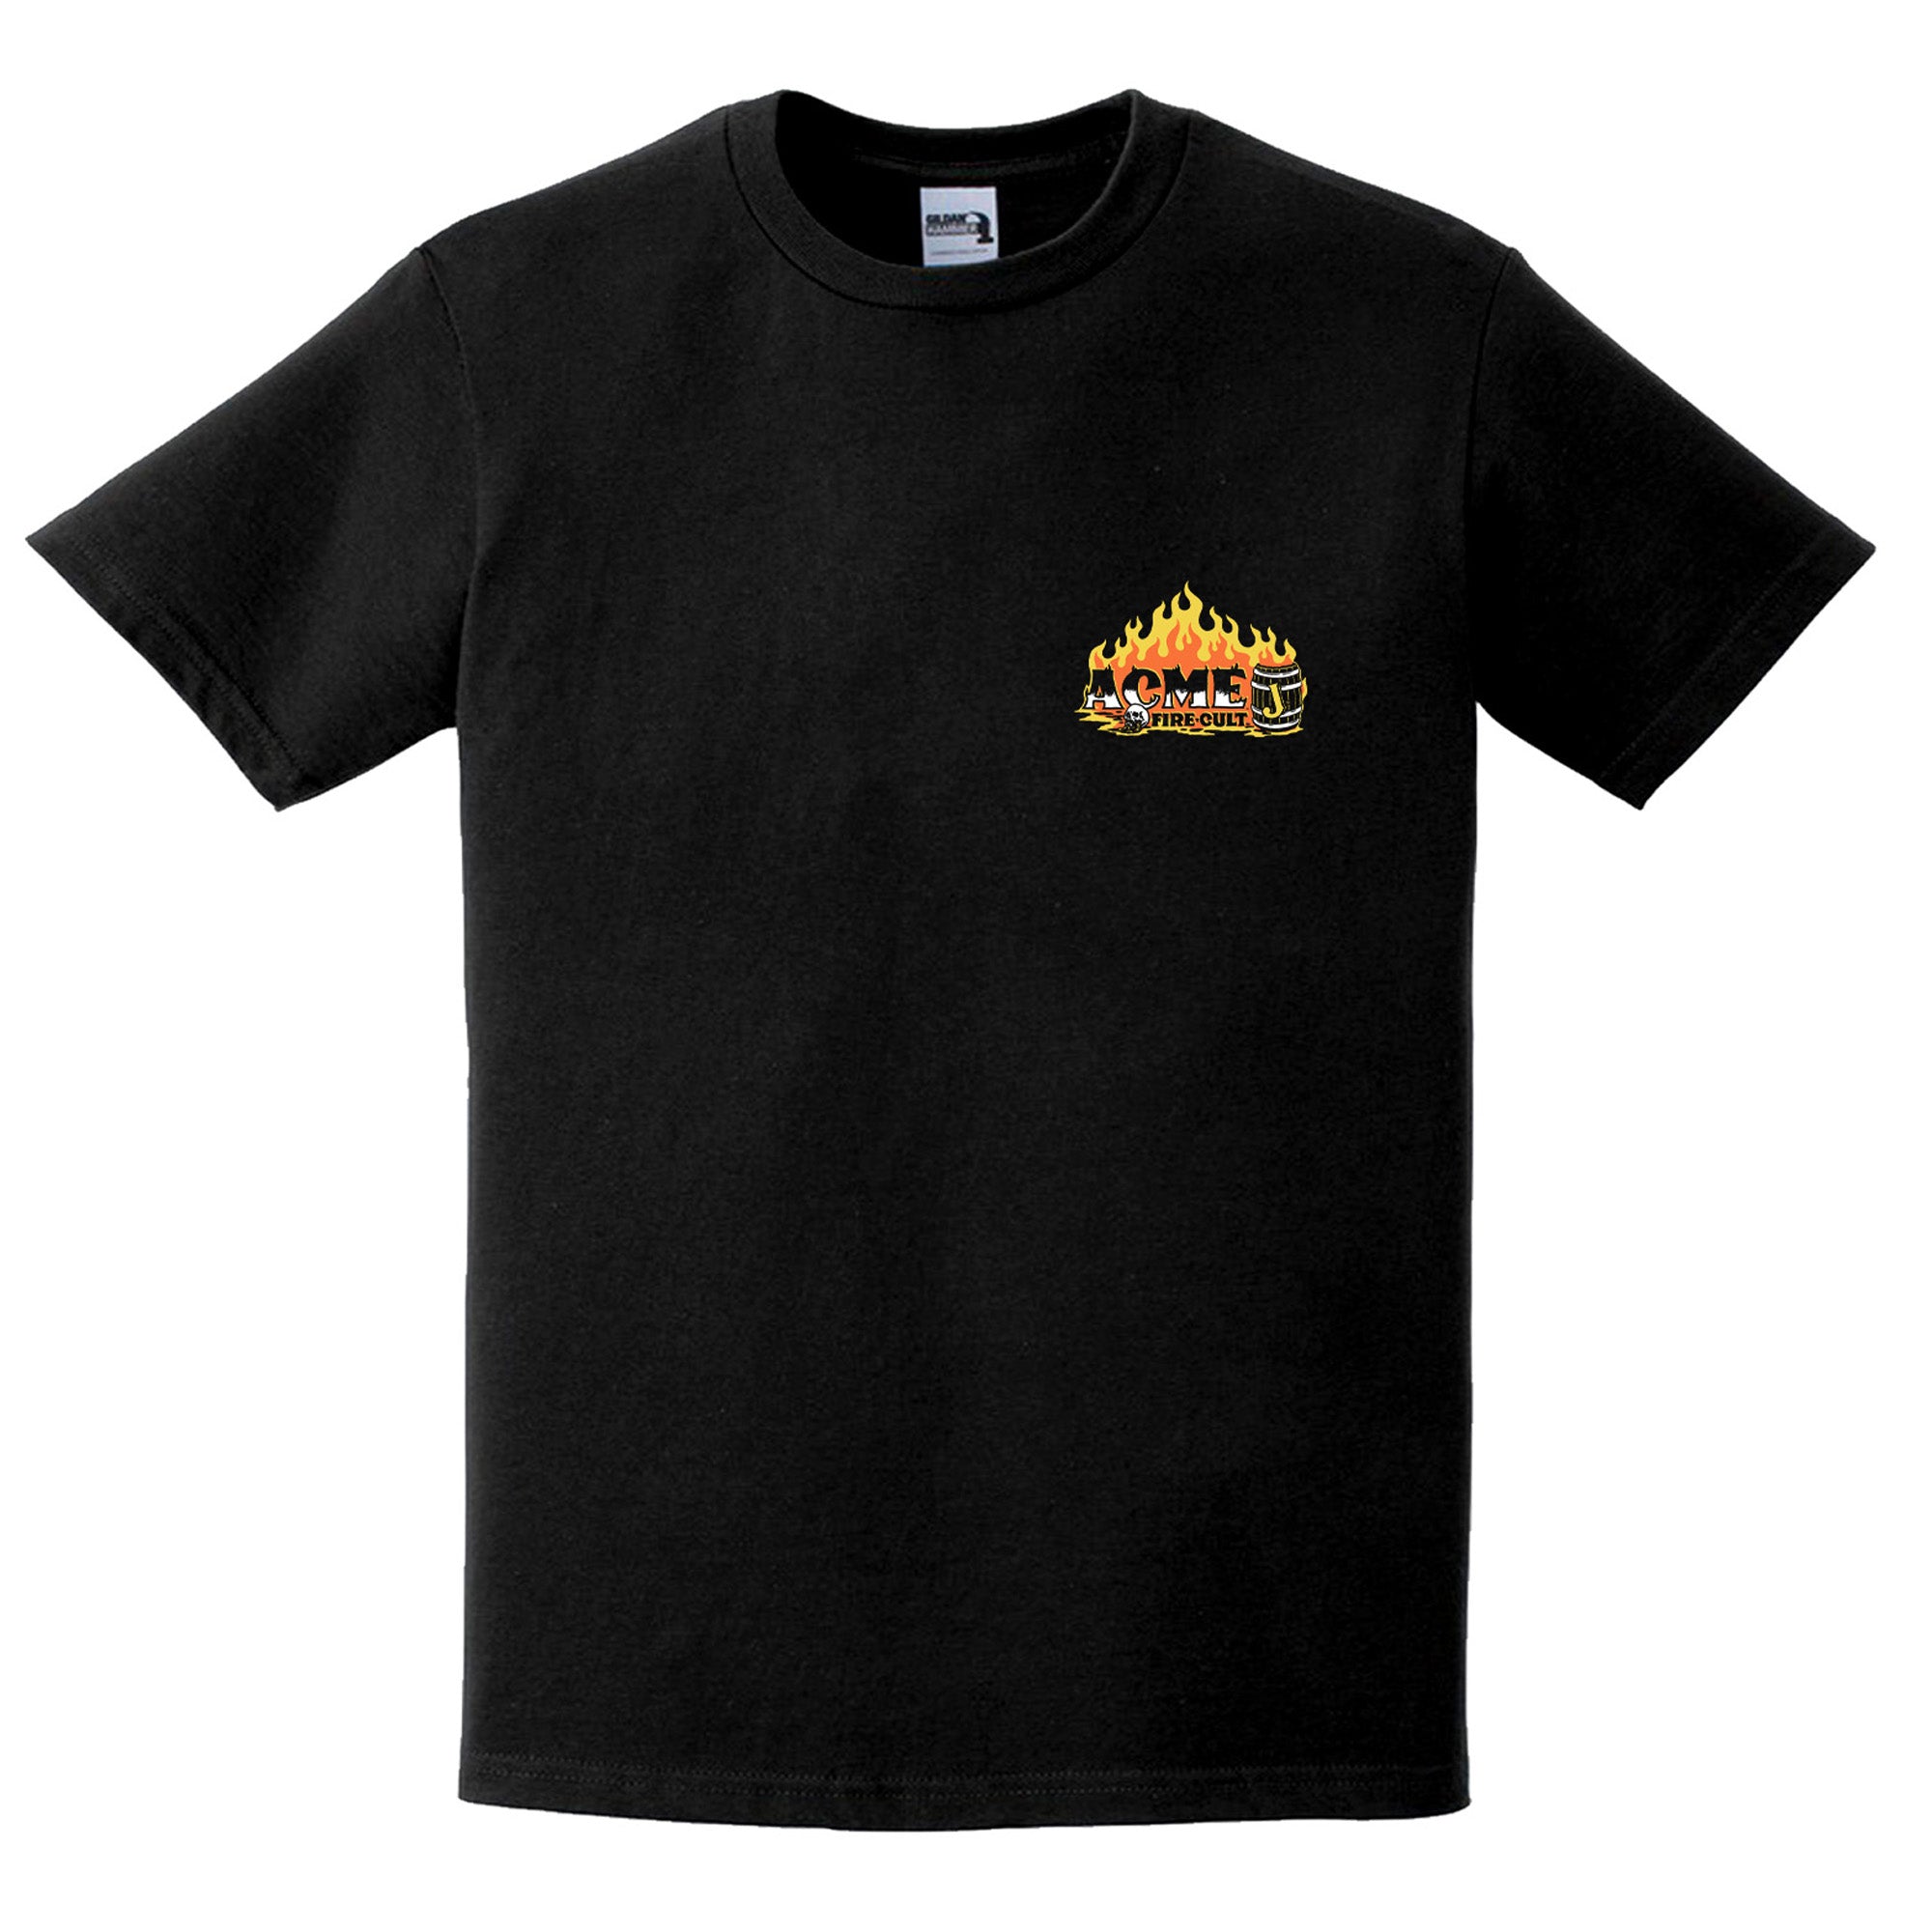 Unisex Jameson Black Barrel x ACME Fire Cult t-shirt